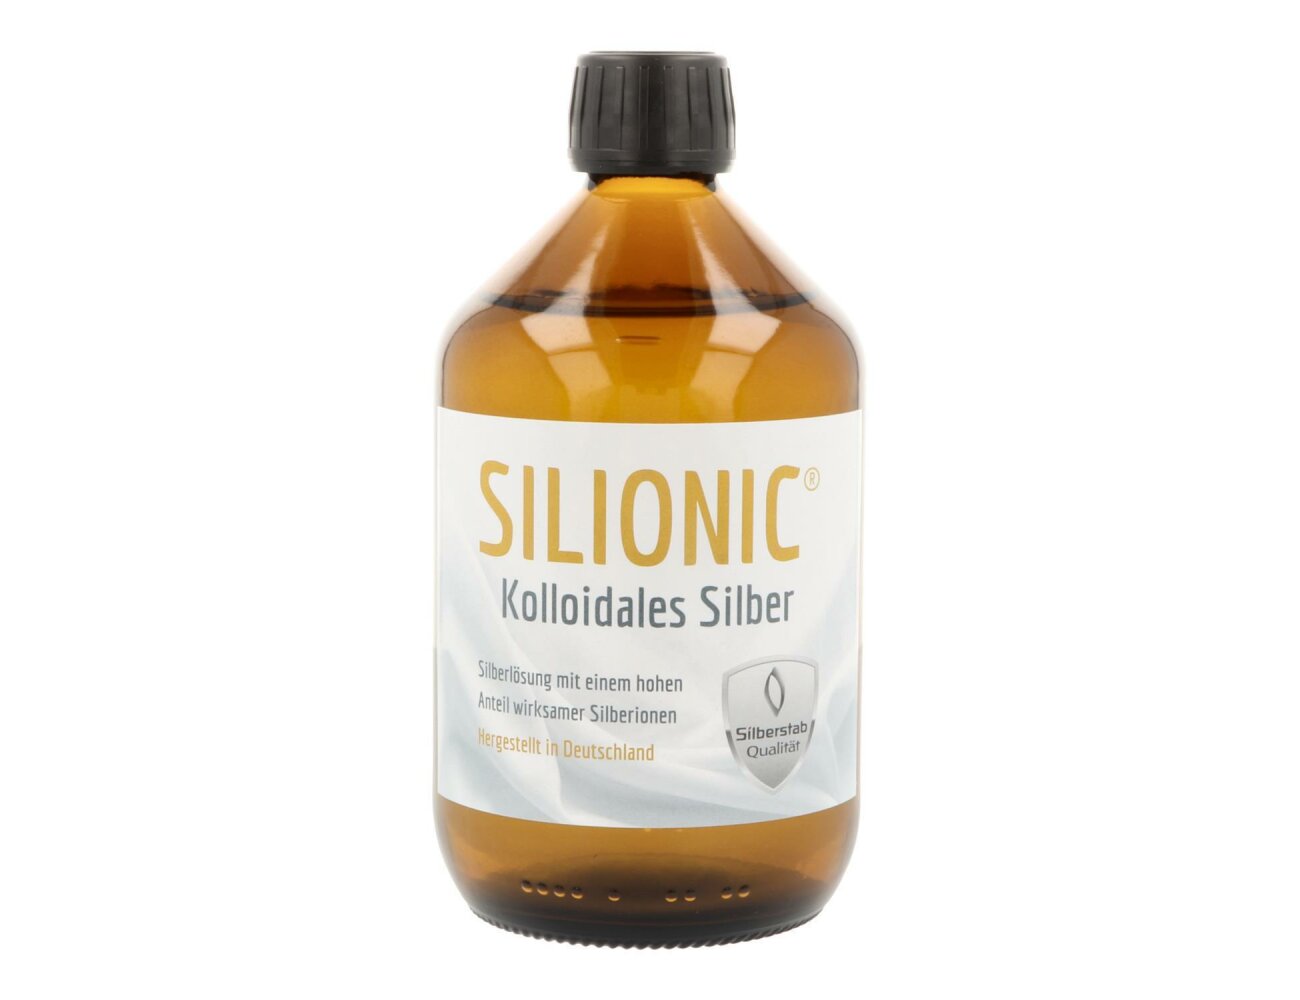 Silionic Kolloidales Silber, 50 ppm, 500 ml